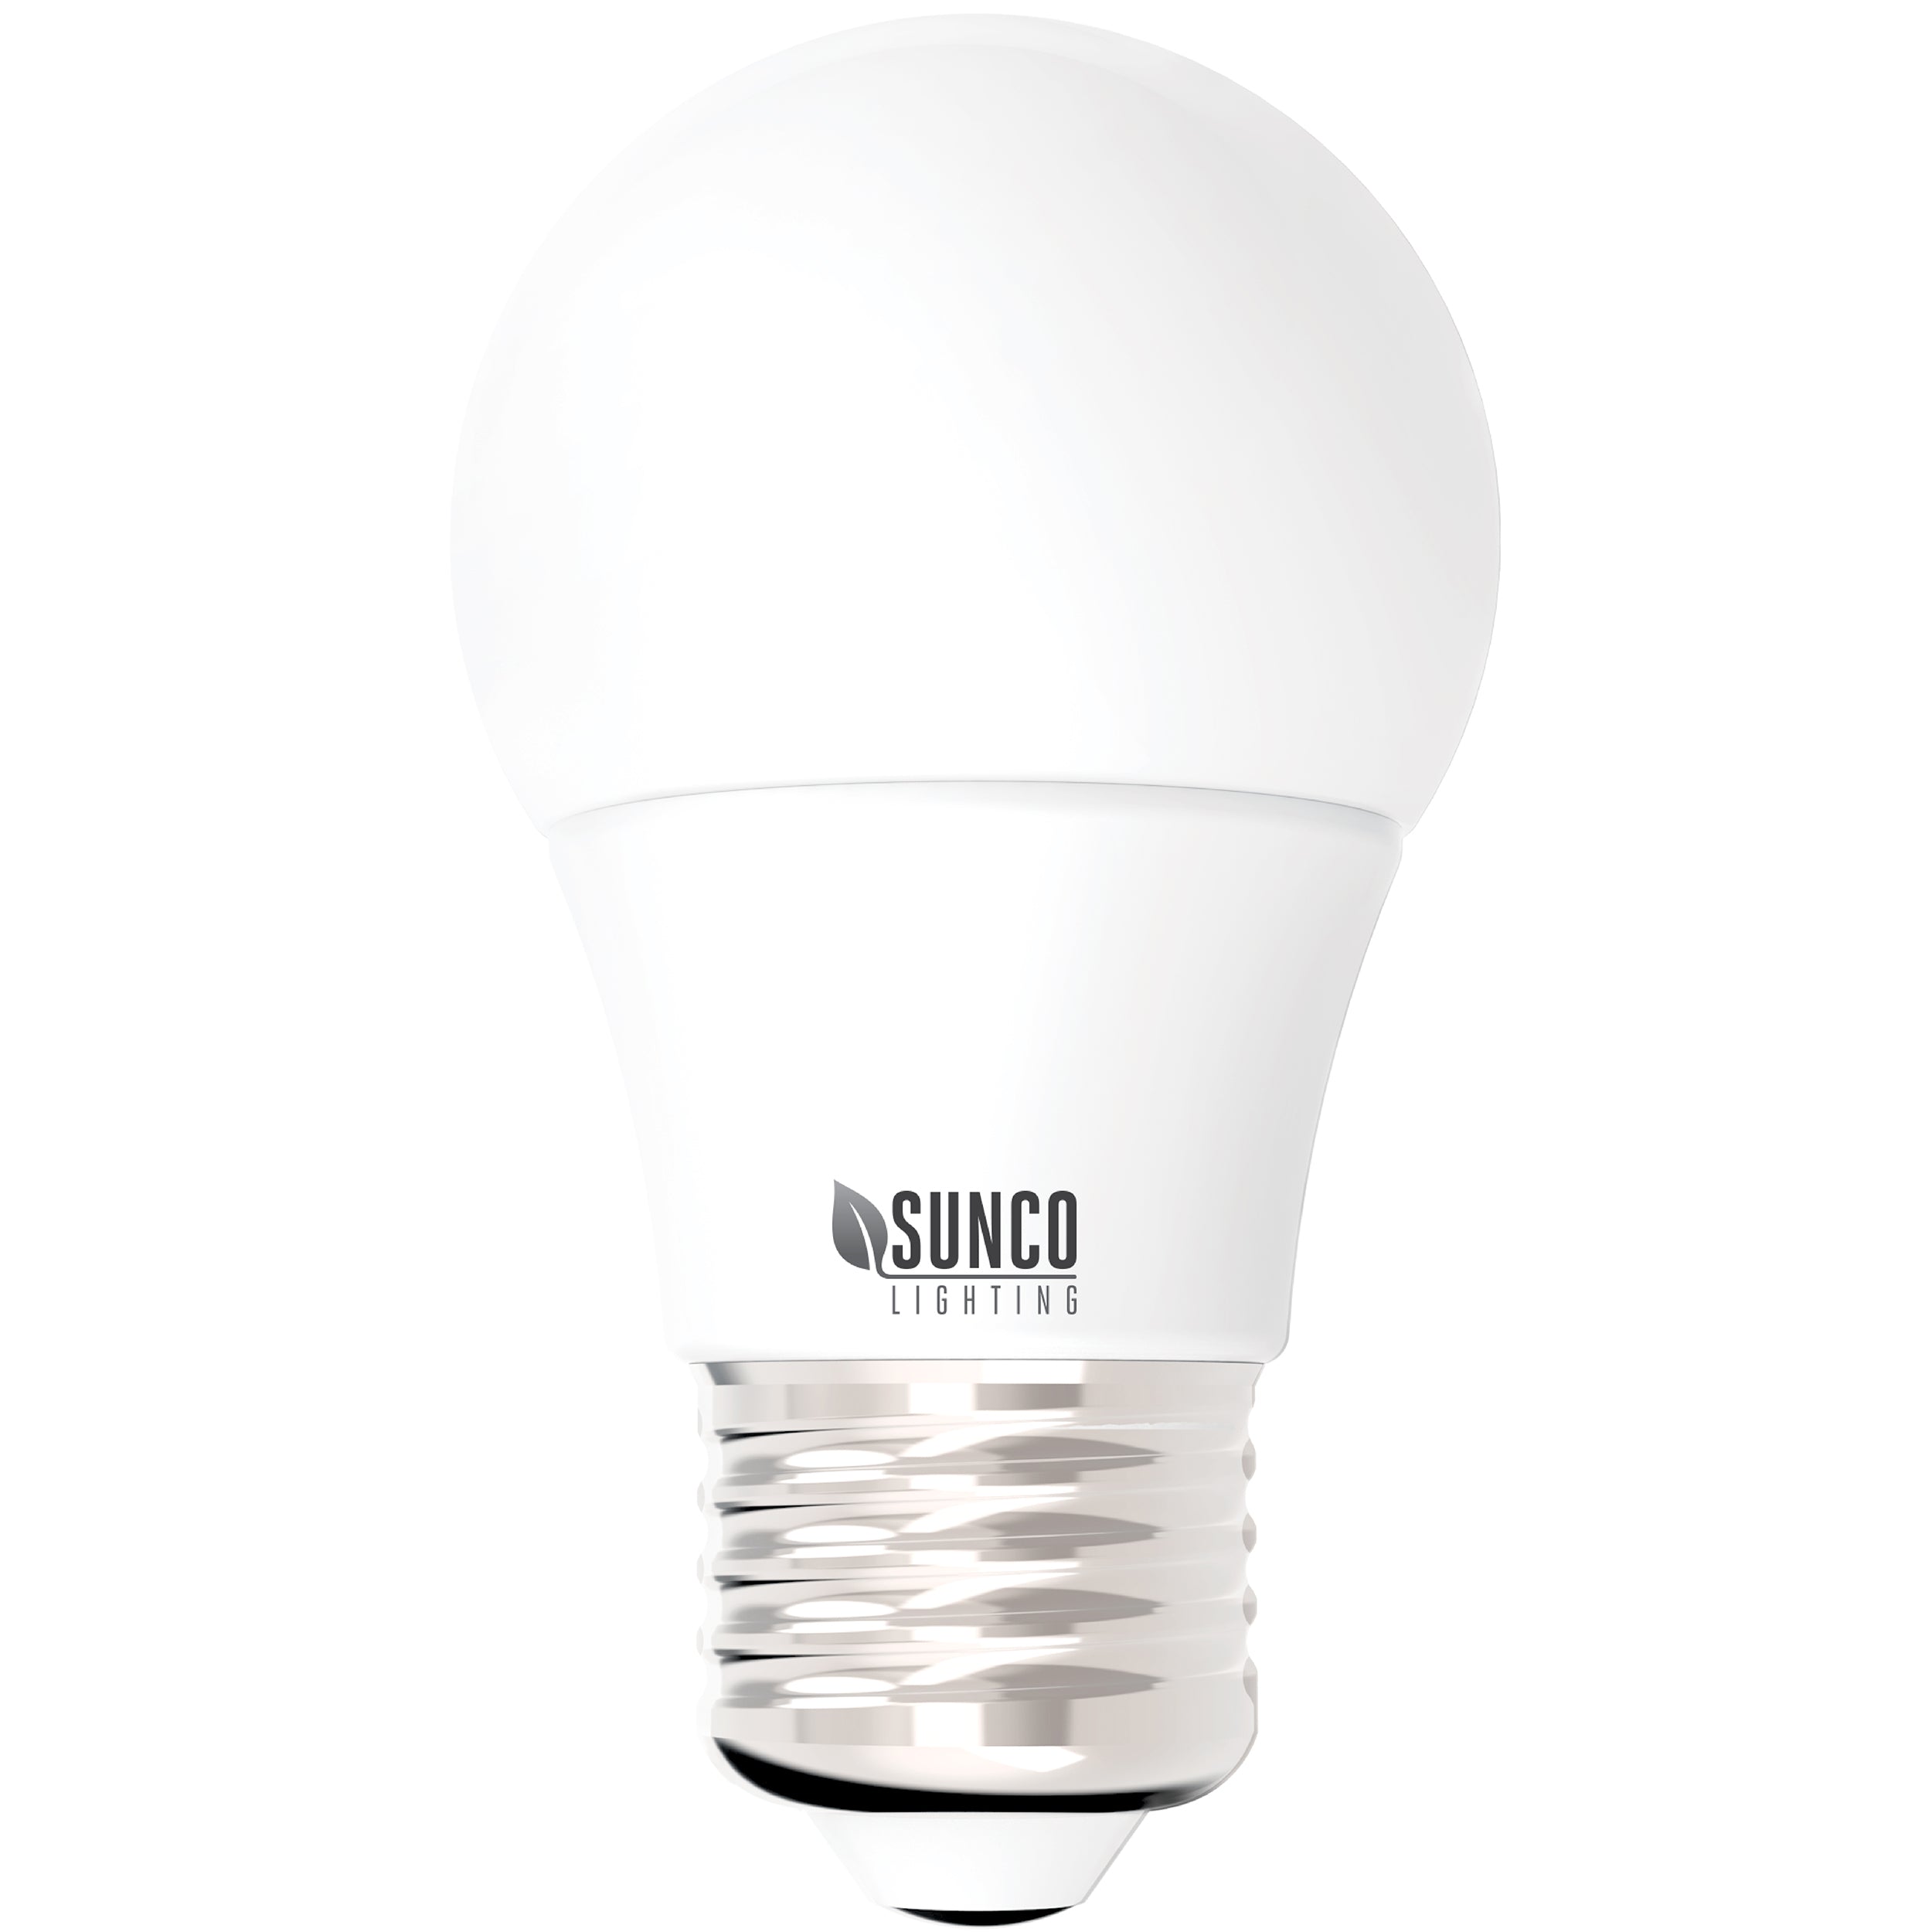 Sunco Lighting A15 LED Bulb